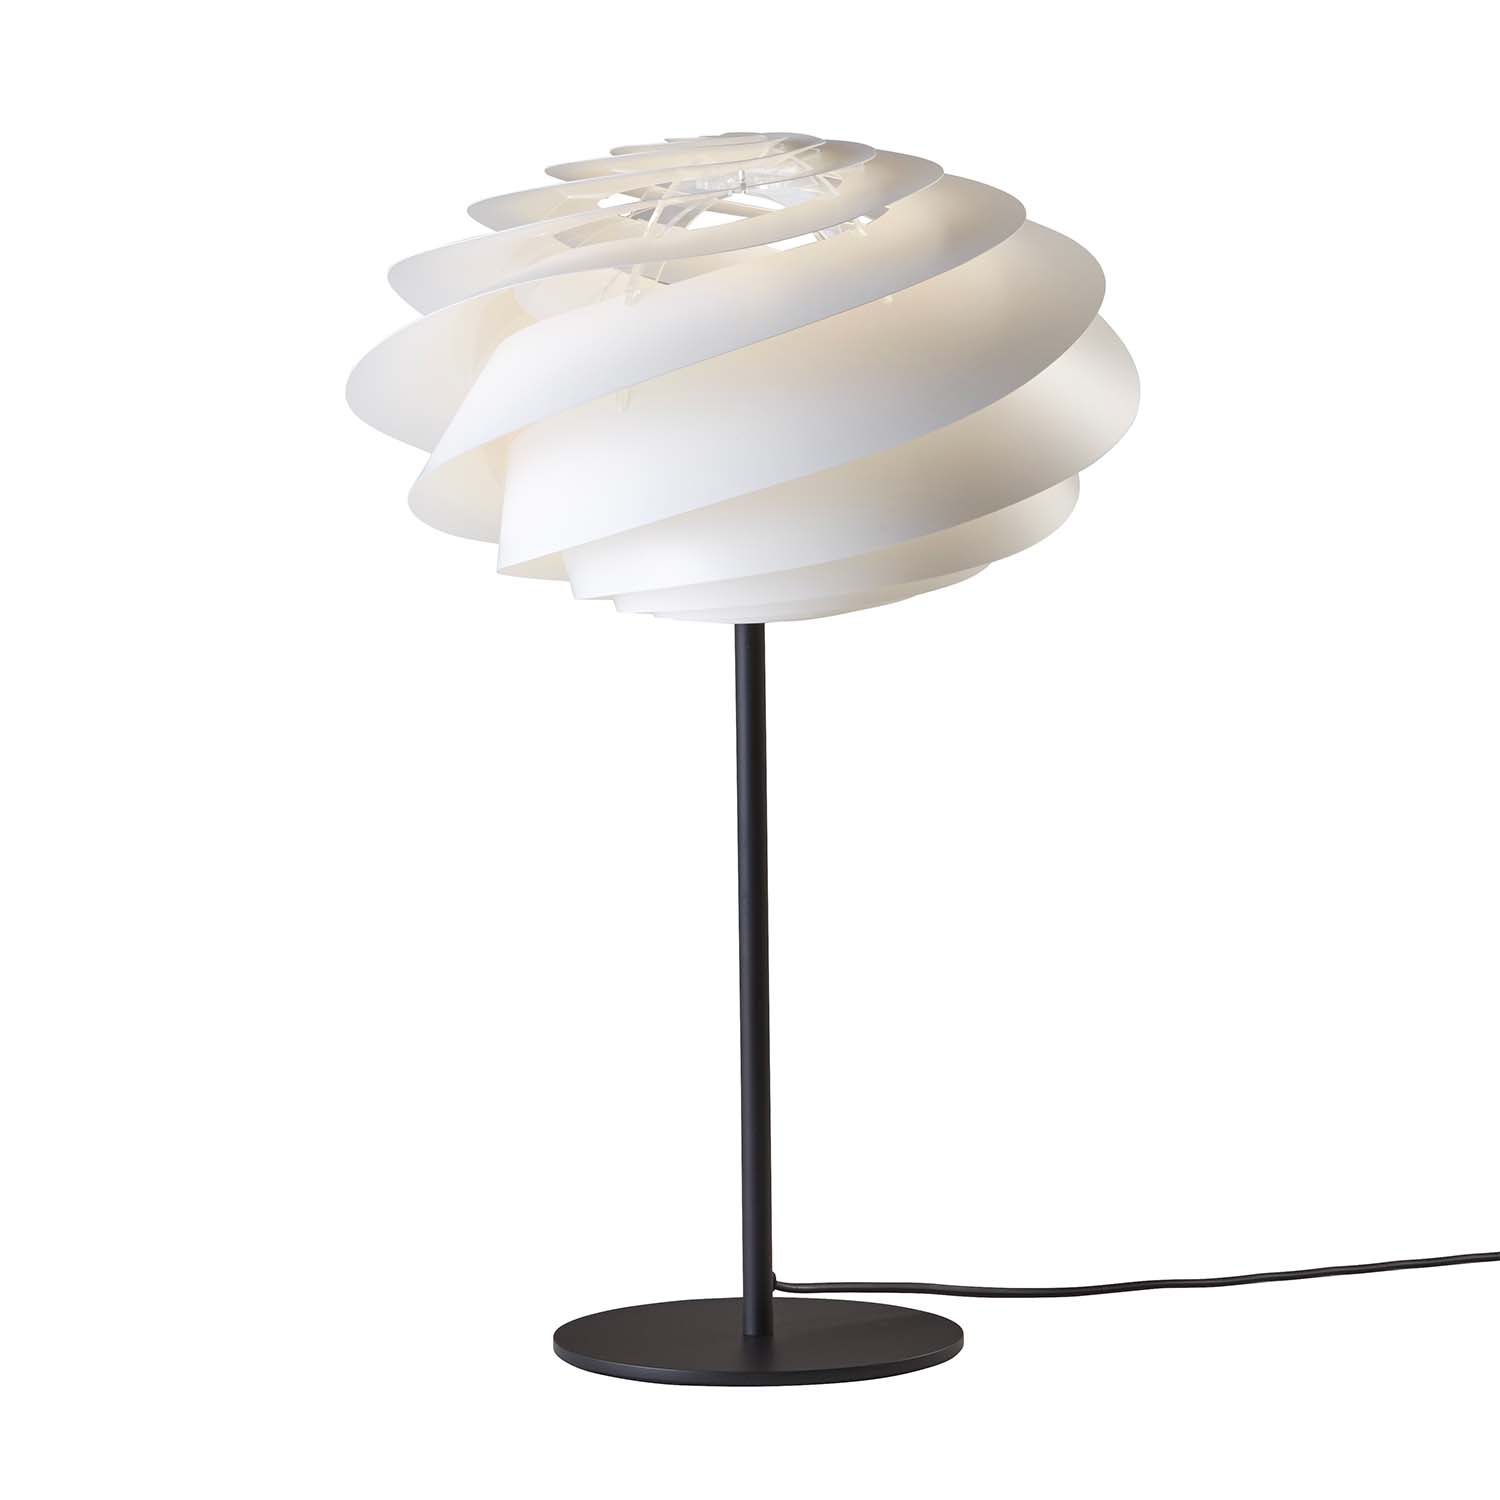 SWIRL Table - White and black spiral table lamp, designer creation